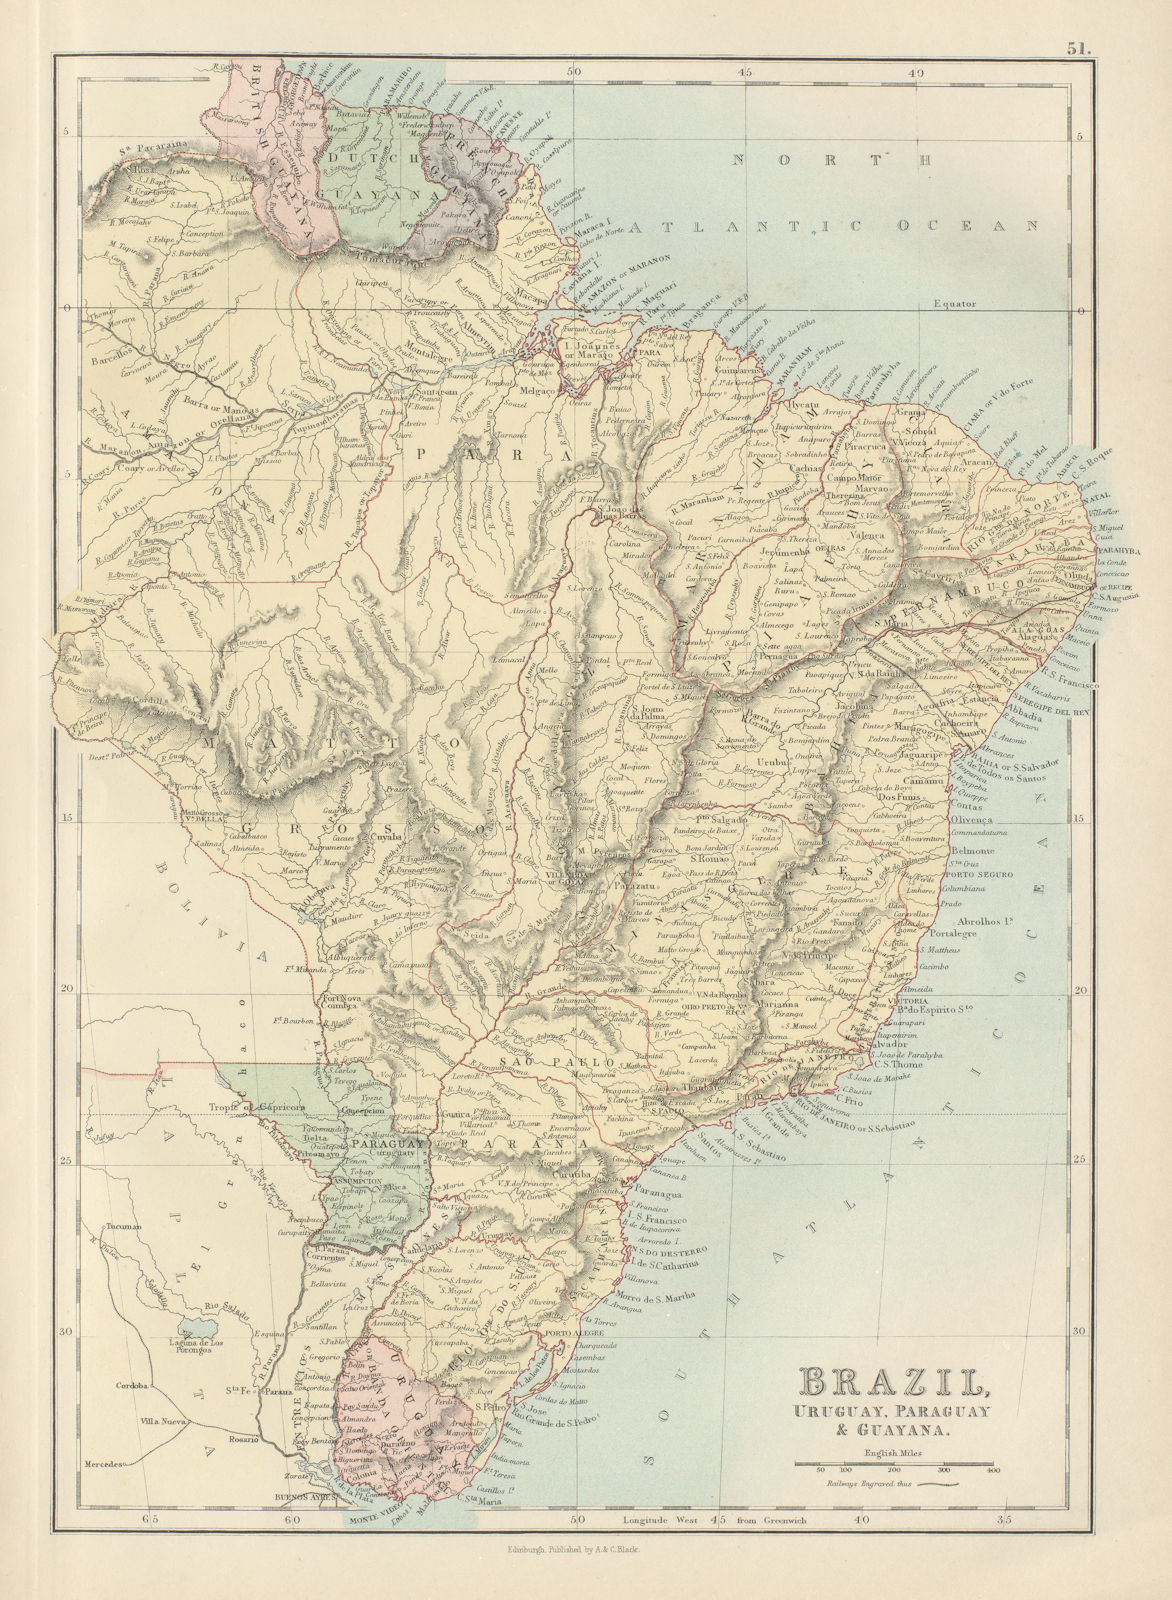 Associate Product Brazil, Uruguay, Paraguay & Guayana. Guyanas. BARTHOLOMEW 1882 old antique map